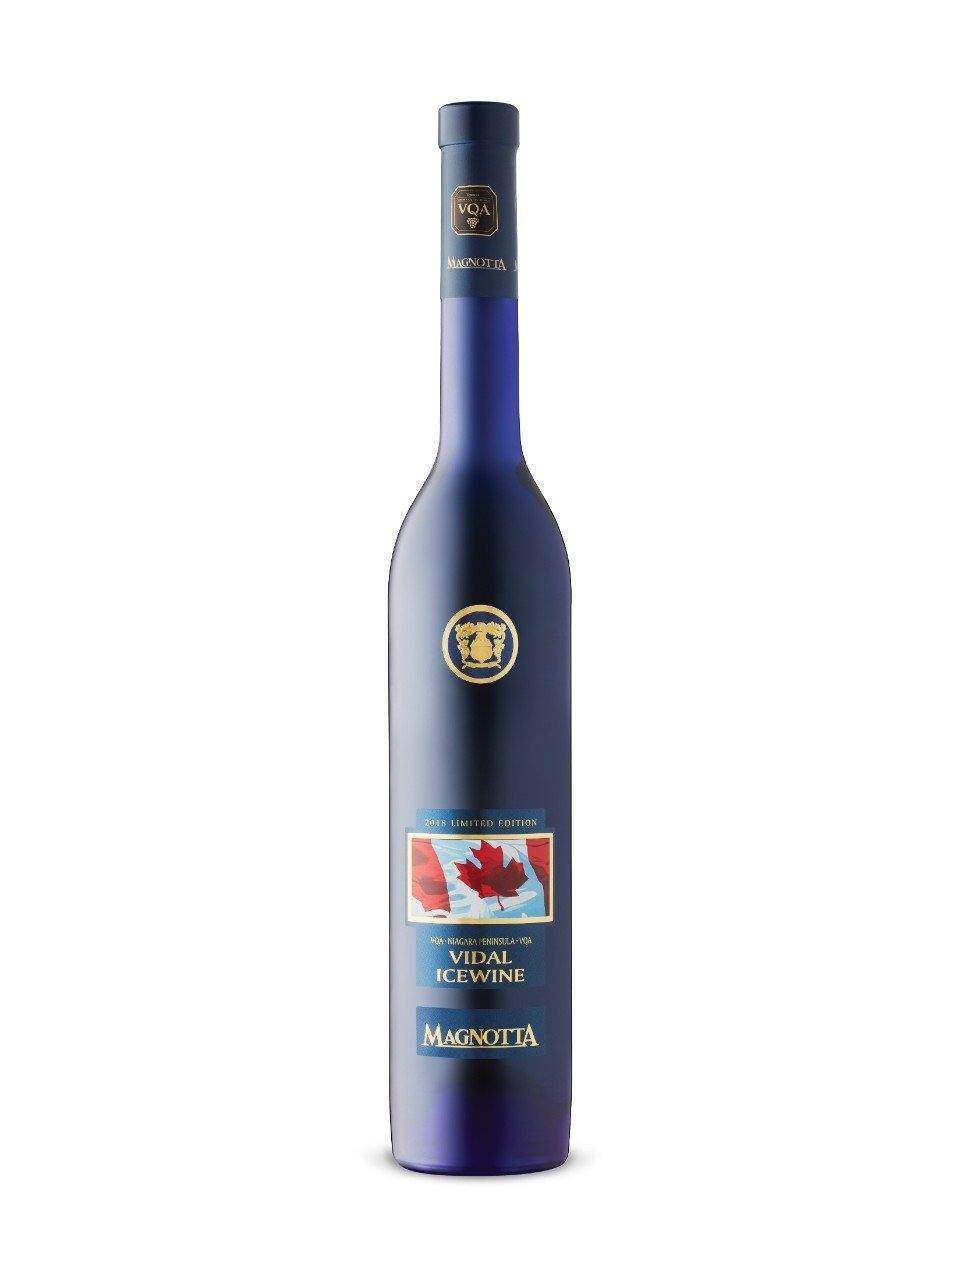 Magnotta Vidal Icewine - Vyno